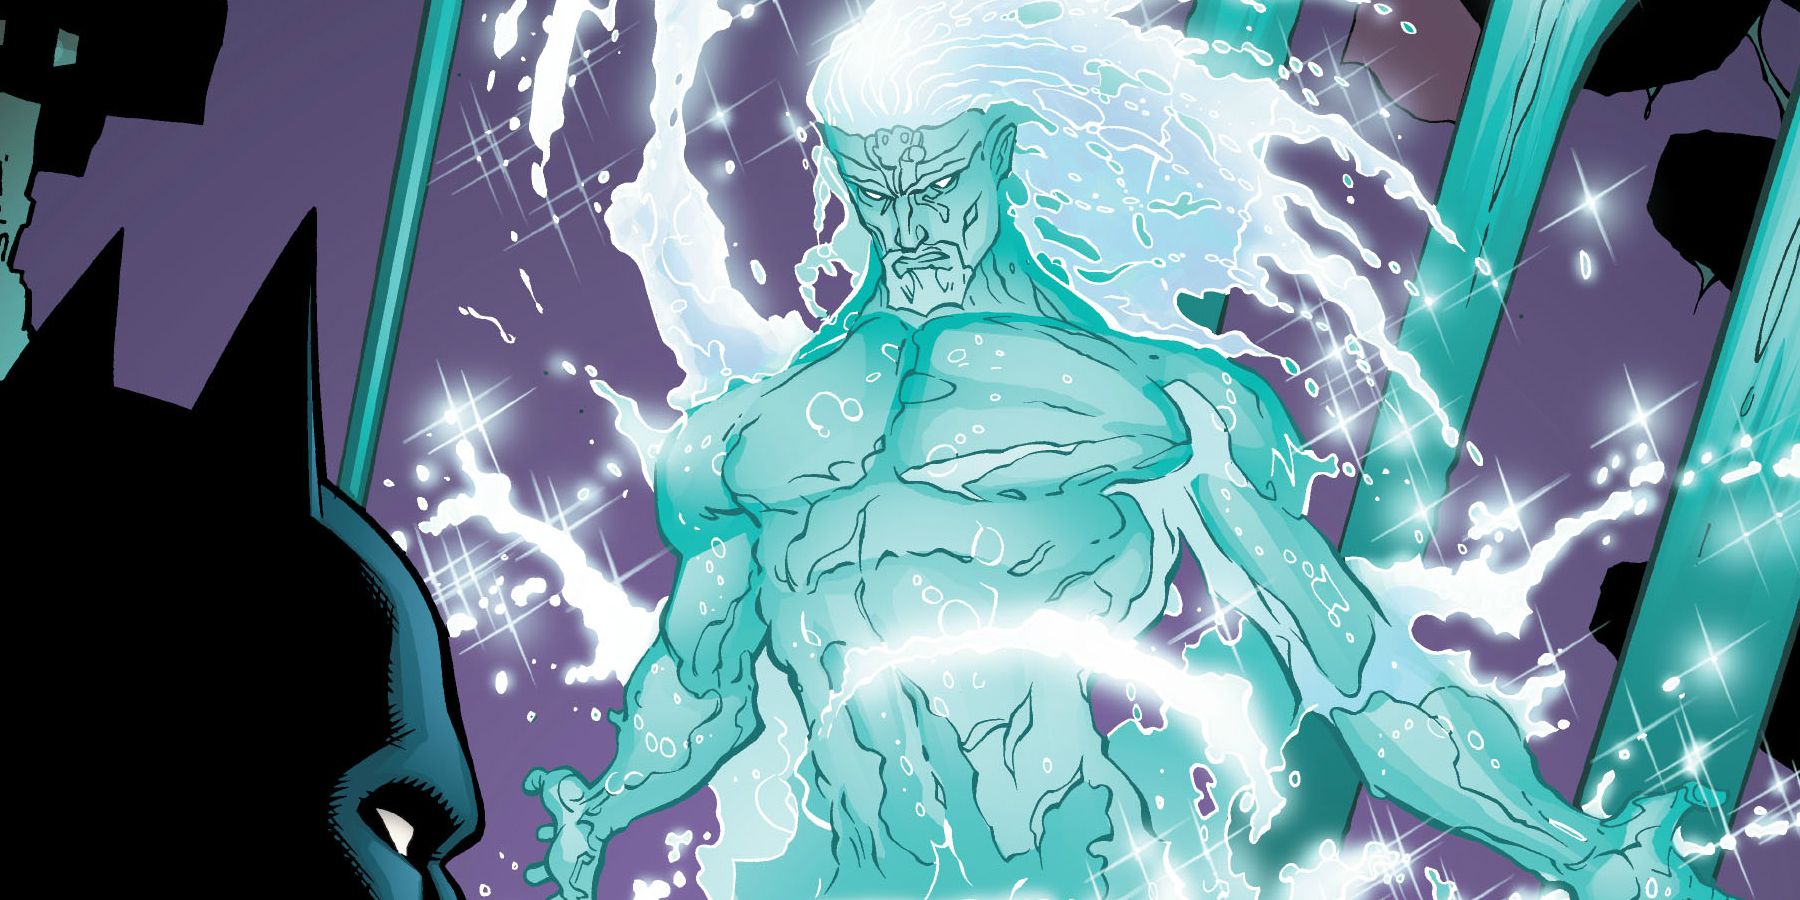 Aquaman as the Water Wraith